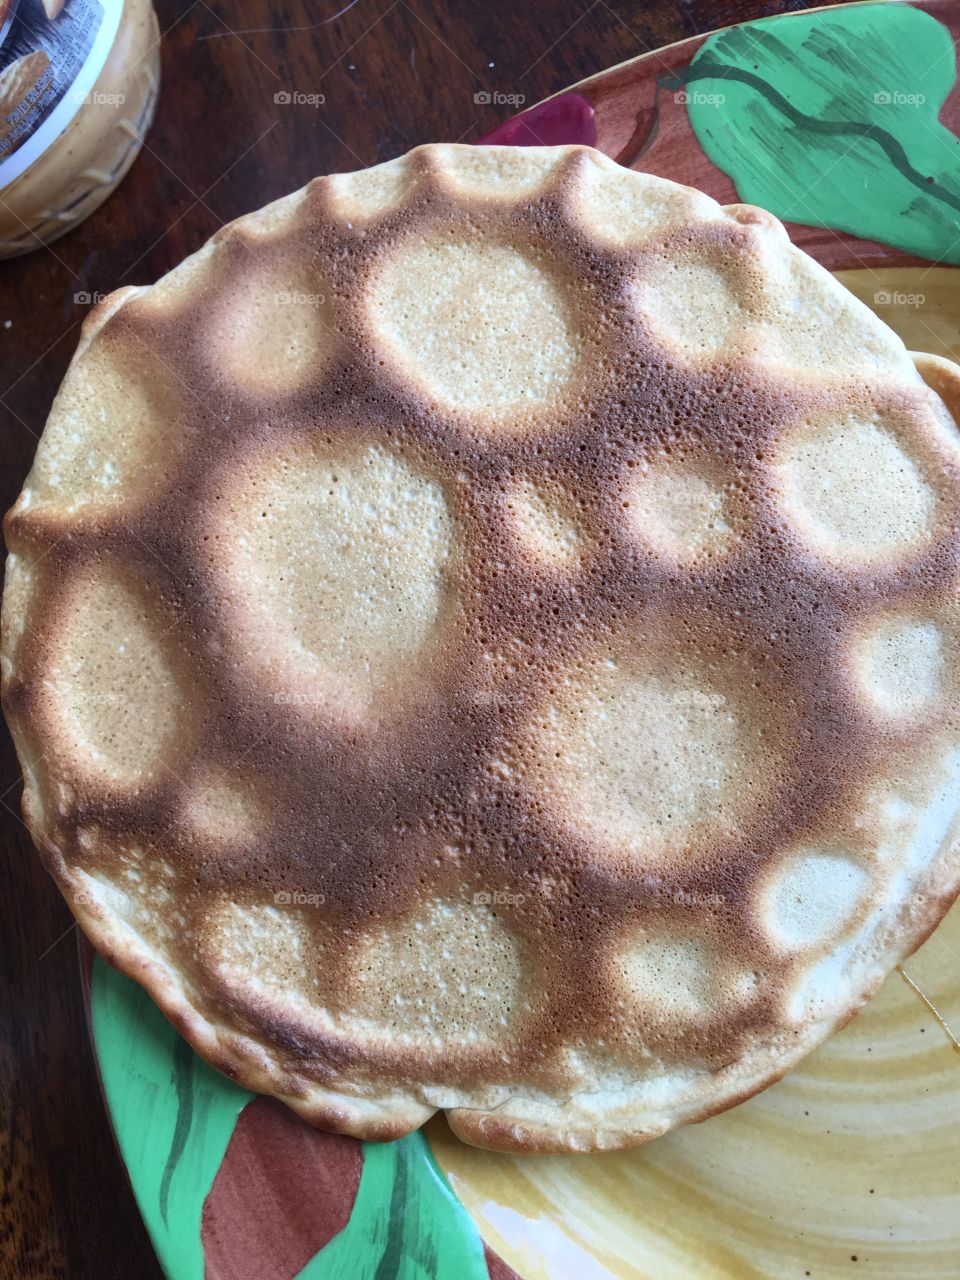 Sourdough pancake or the moon?